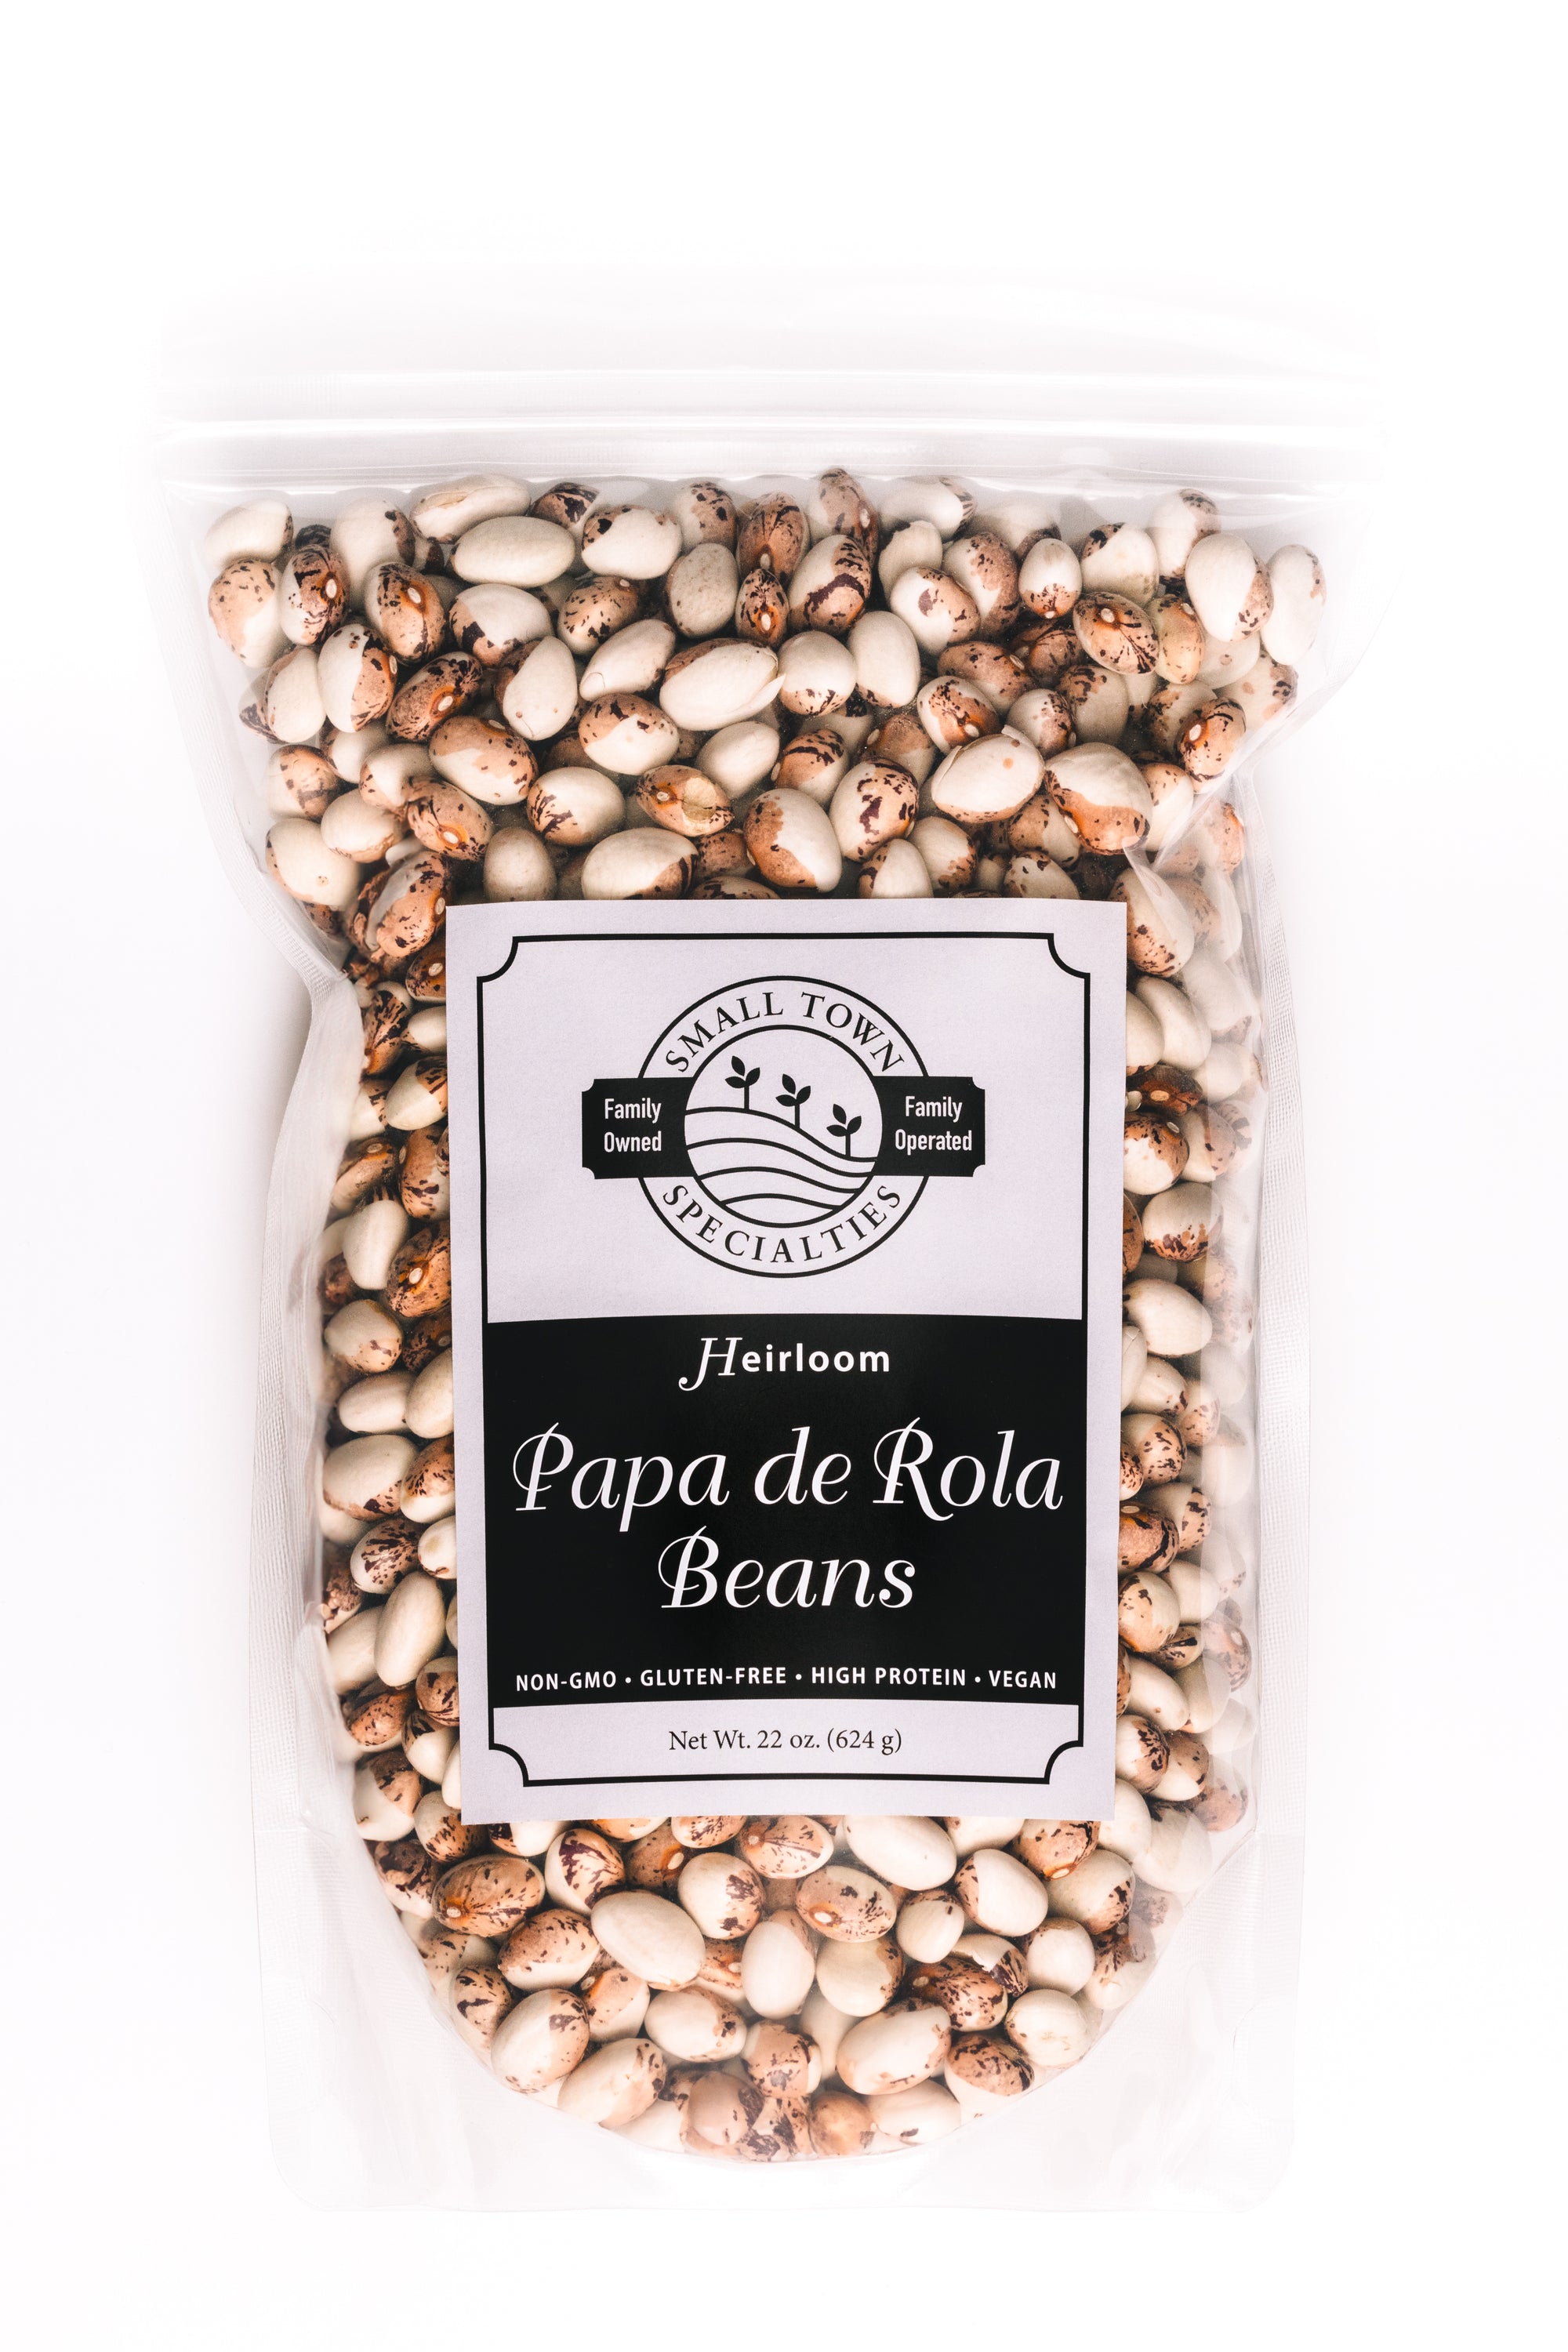 Papa De Rola Beans – Small Town Specialties